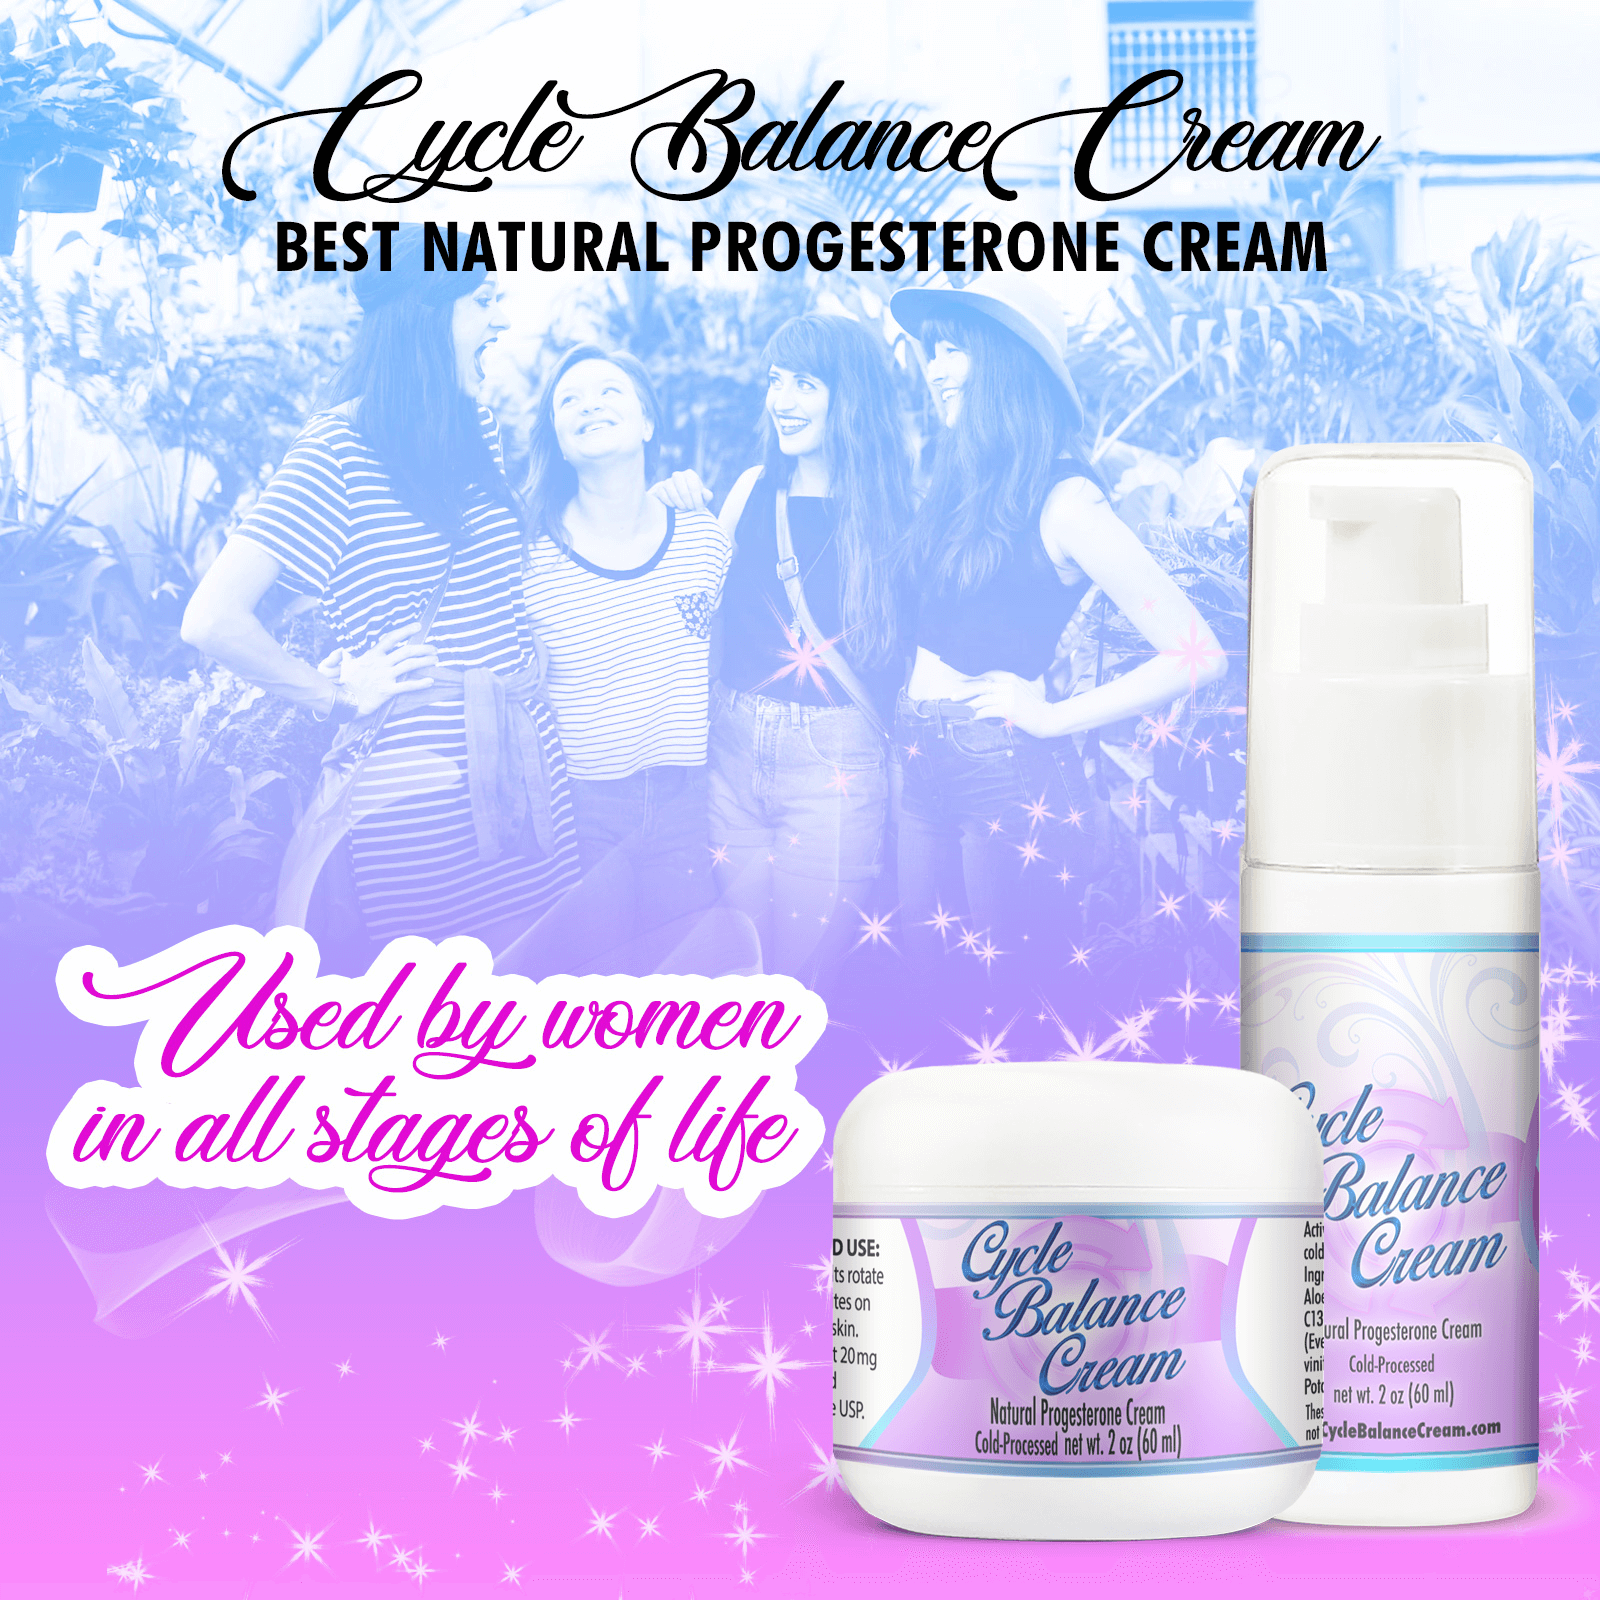 Cycle Balance Cream Best Natural Progesterone Cream Infographics